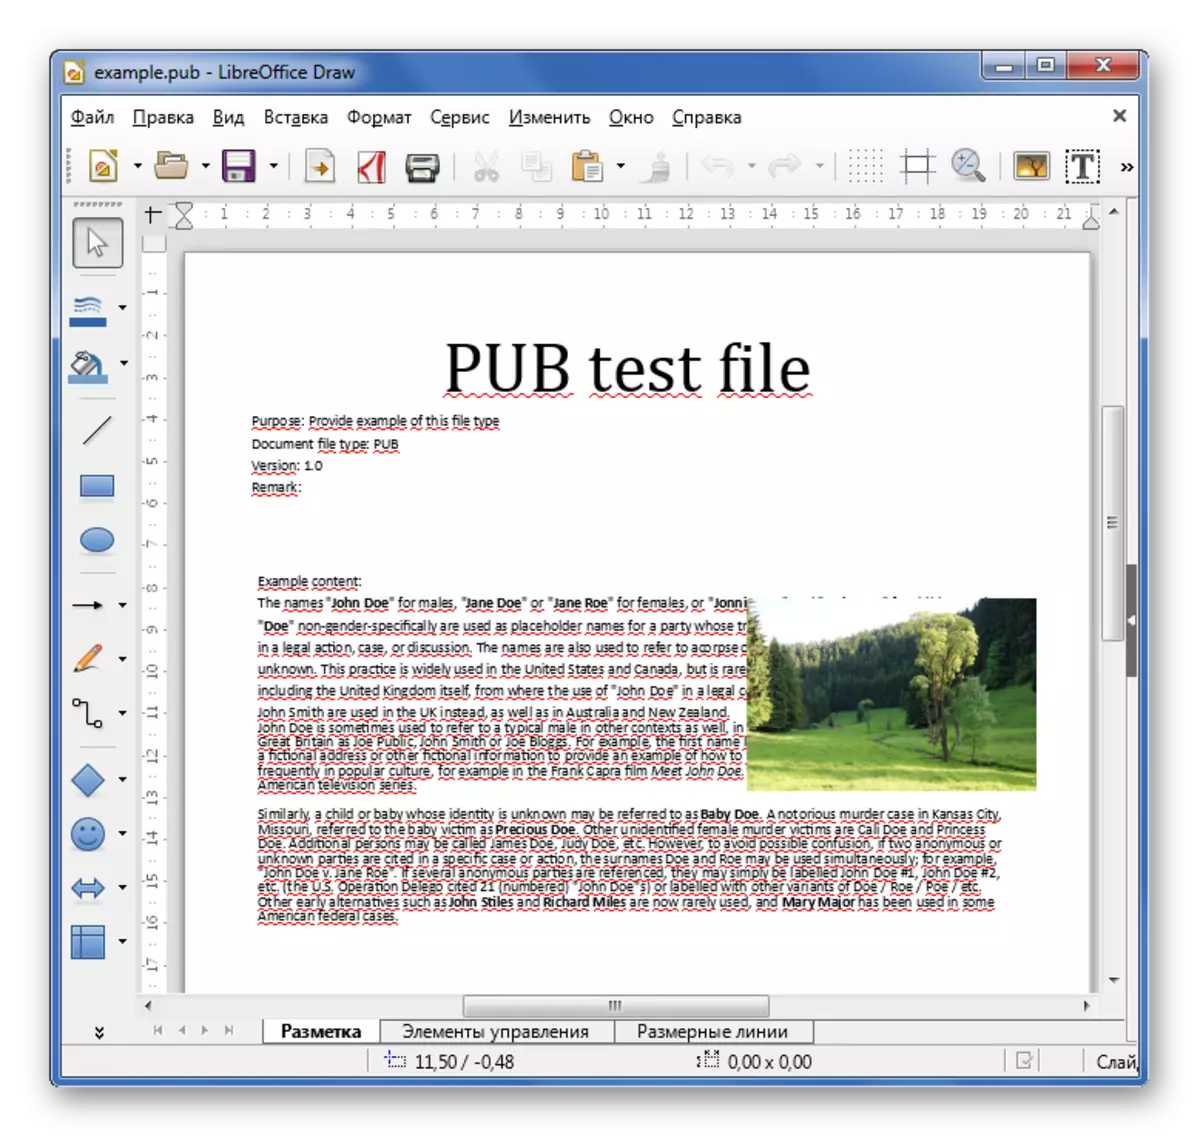 View Pub in LibreOffice